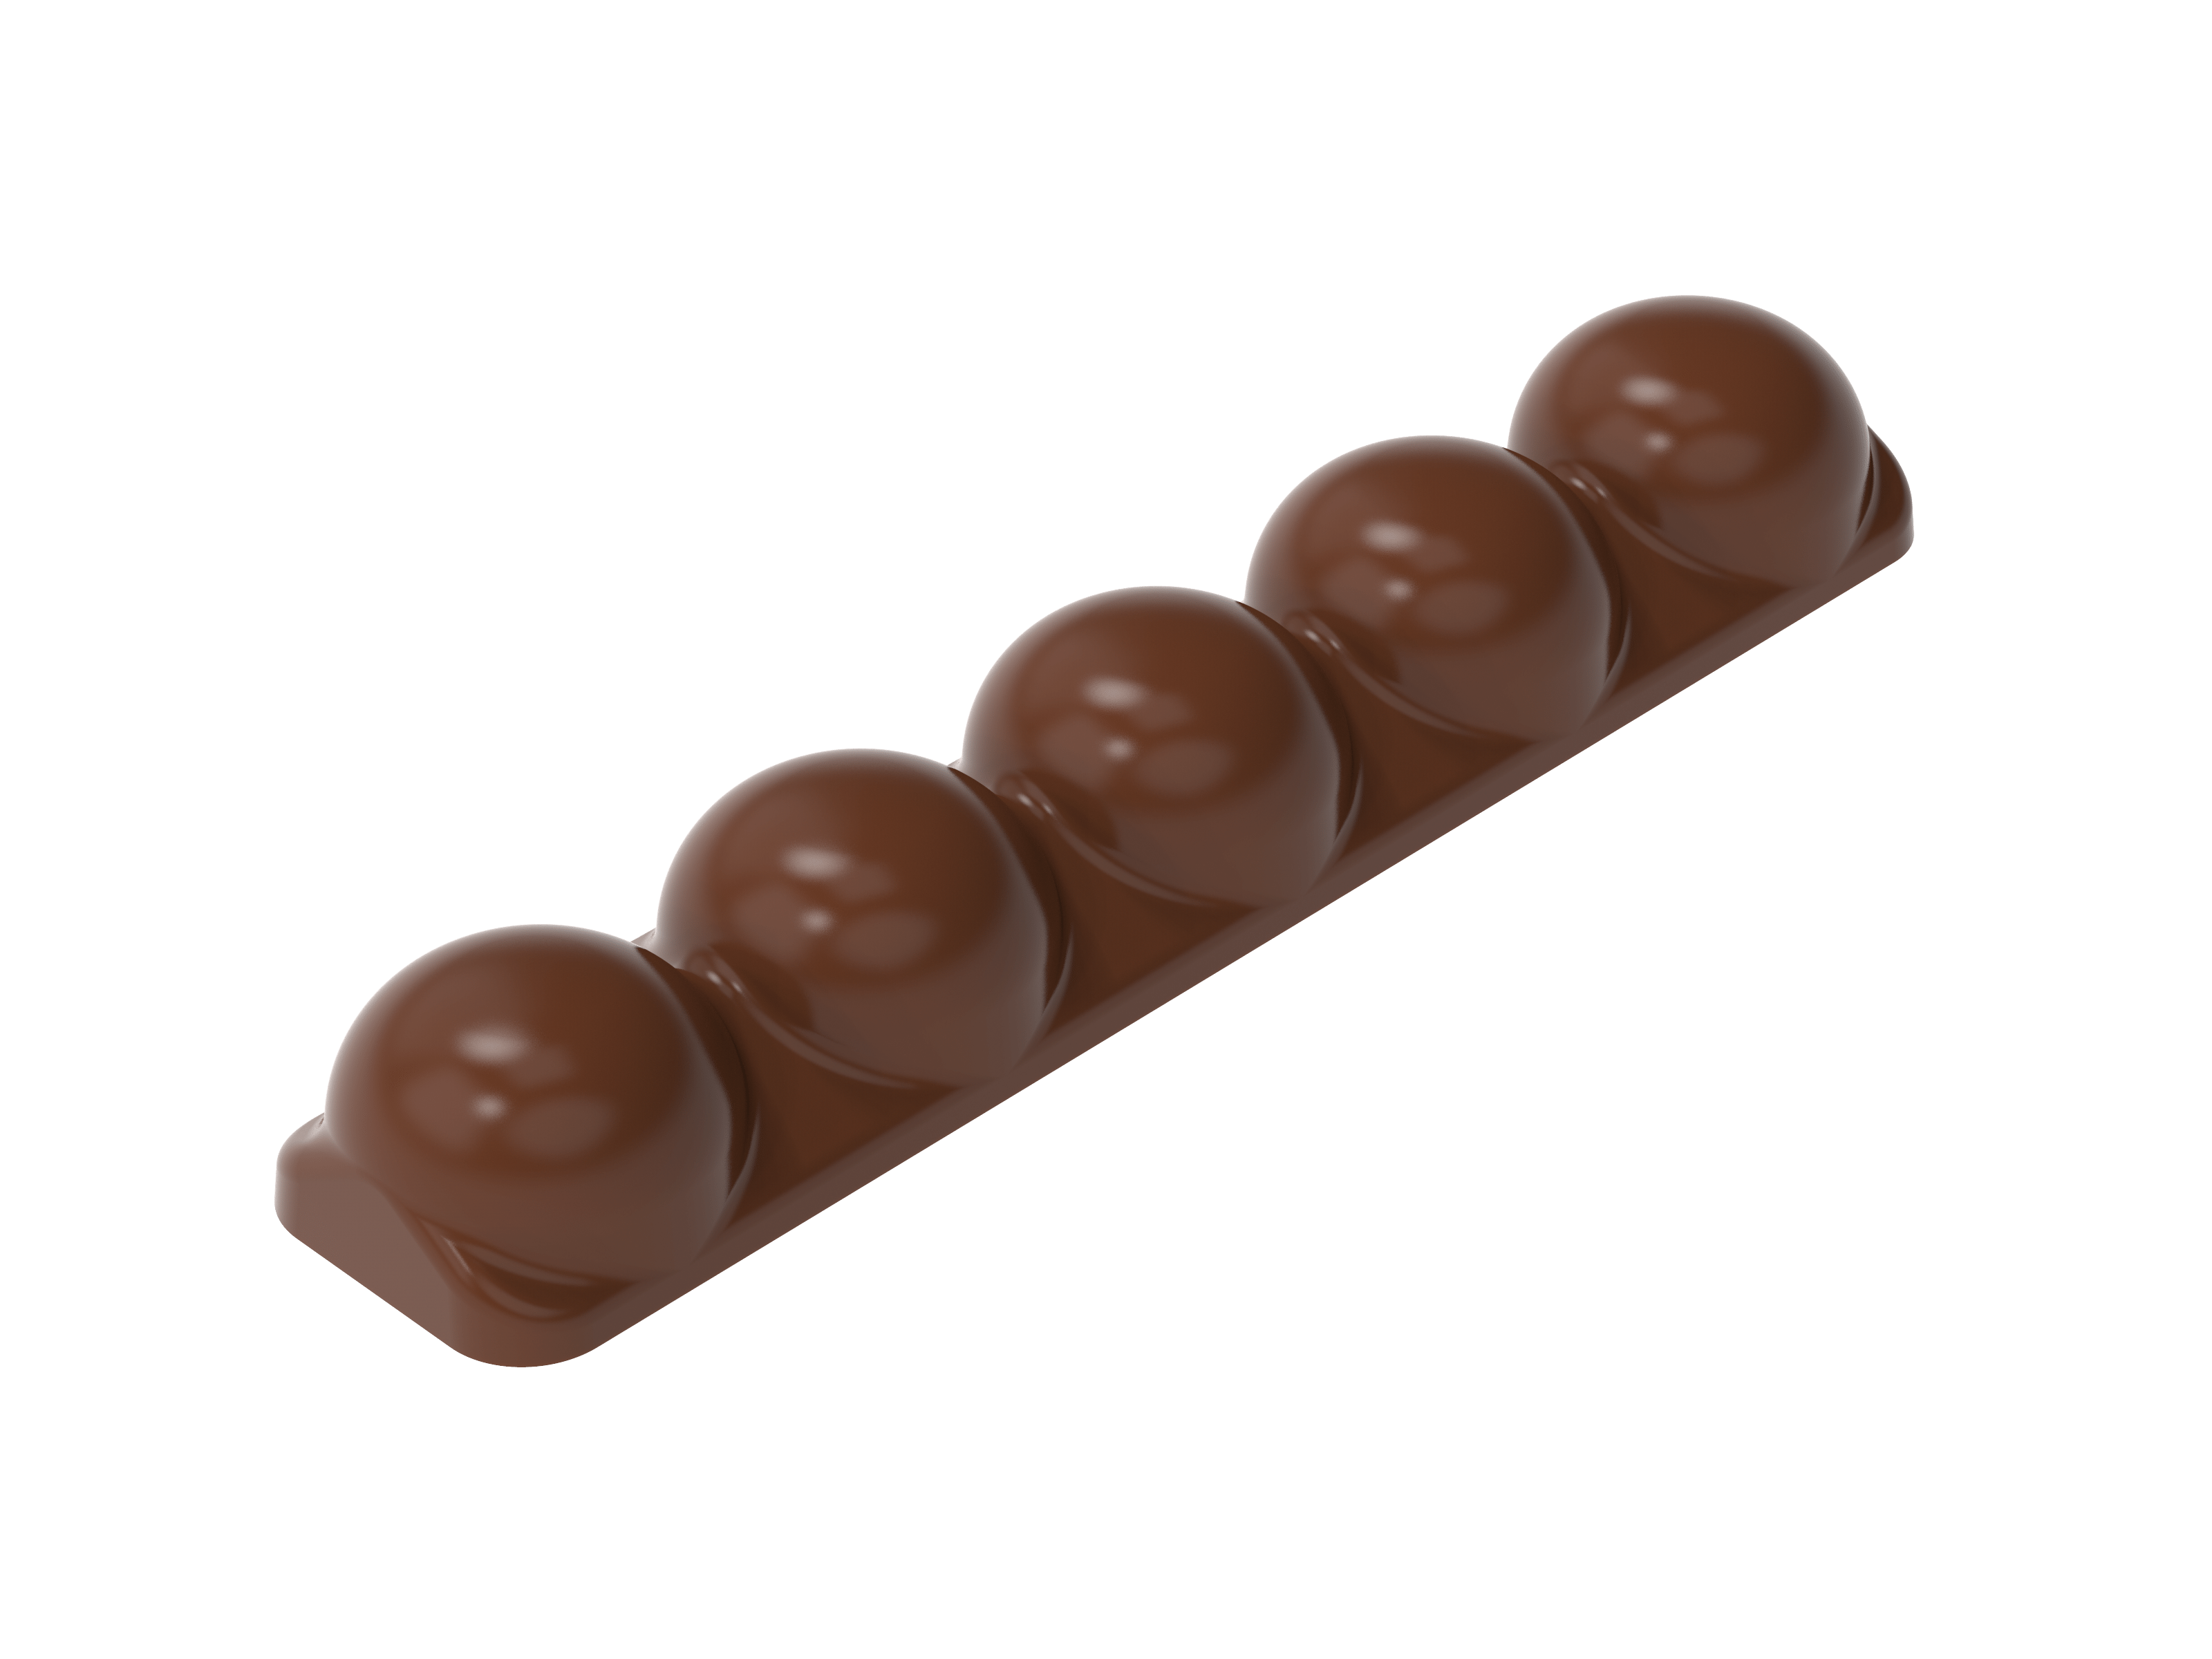 CHOCOLATE BAR MOULD 5 x 2 CROSSED - Savy Goiseau